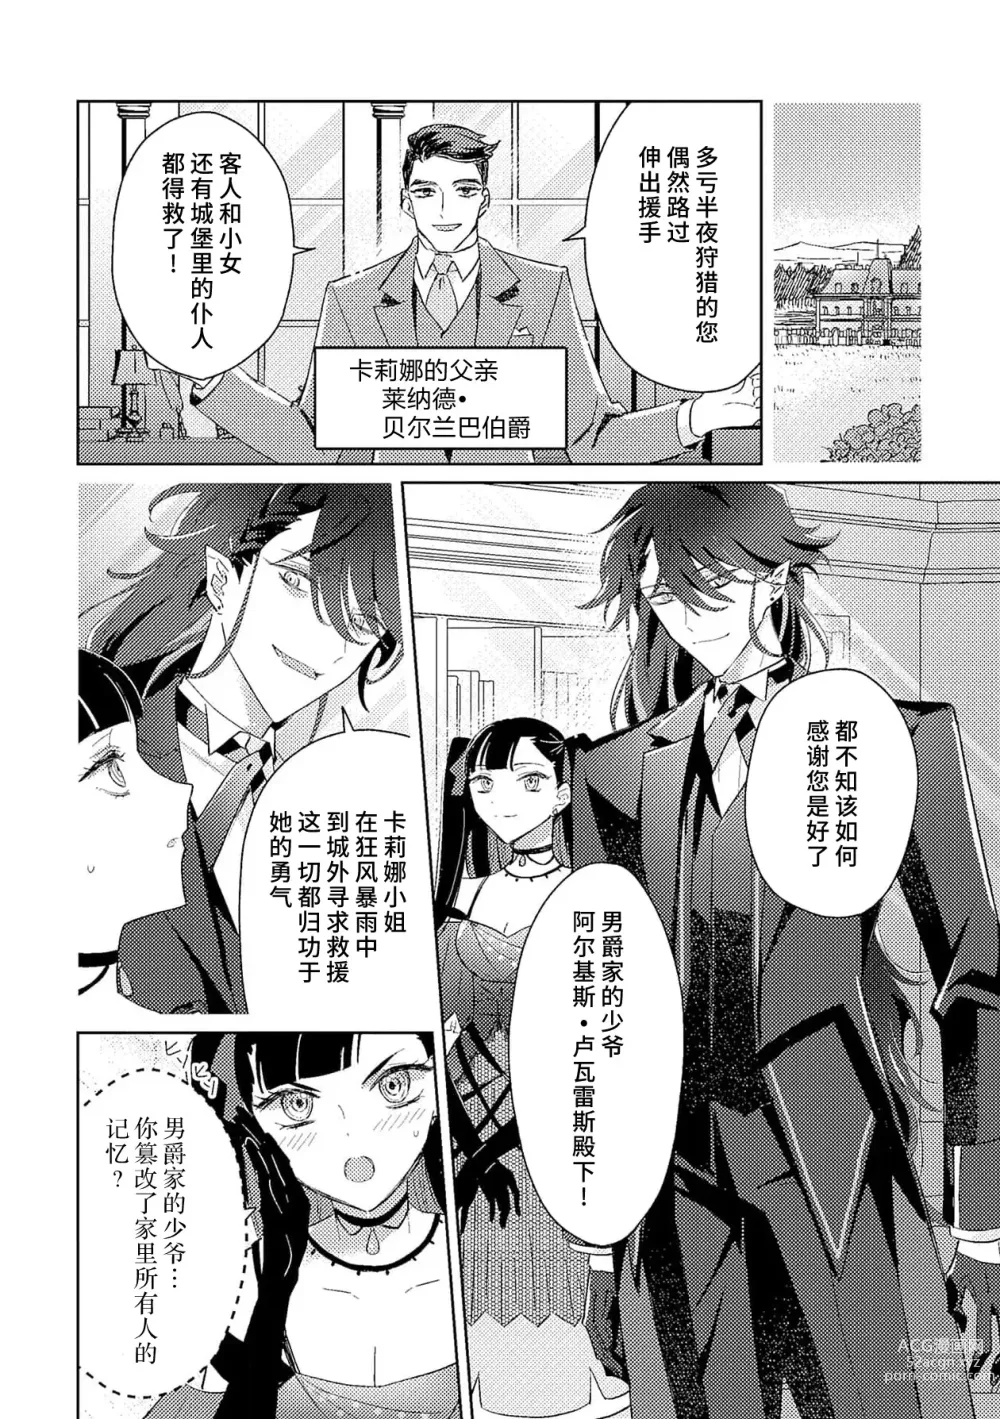 Page 24 of manga 身为恶役千金，堕落于魔界王子身下这条路线真的可以有？ 1-4